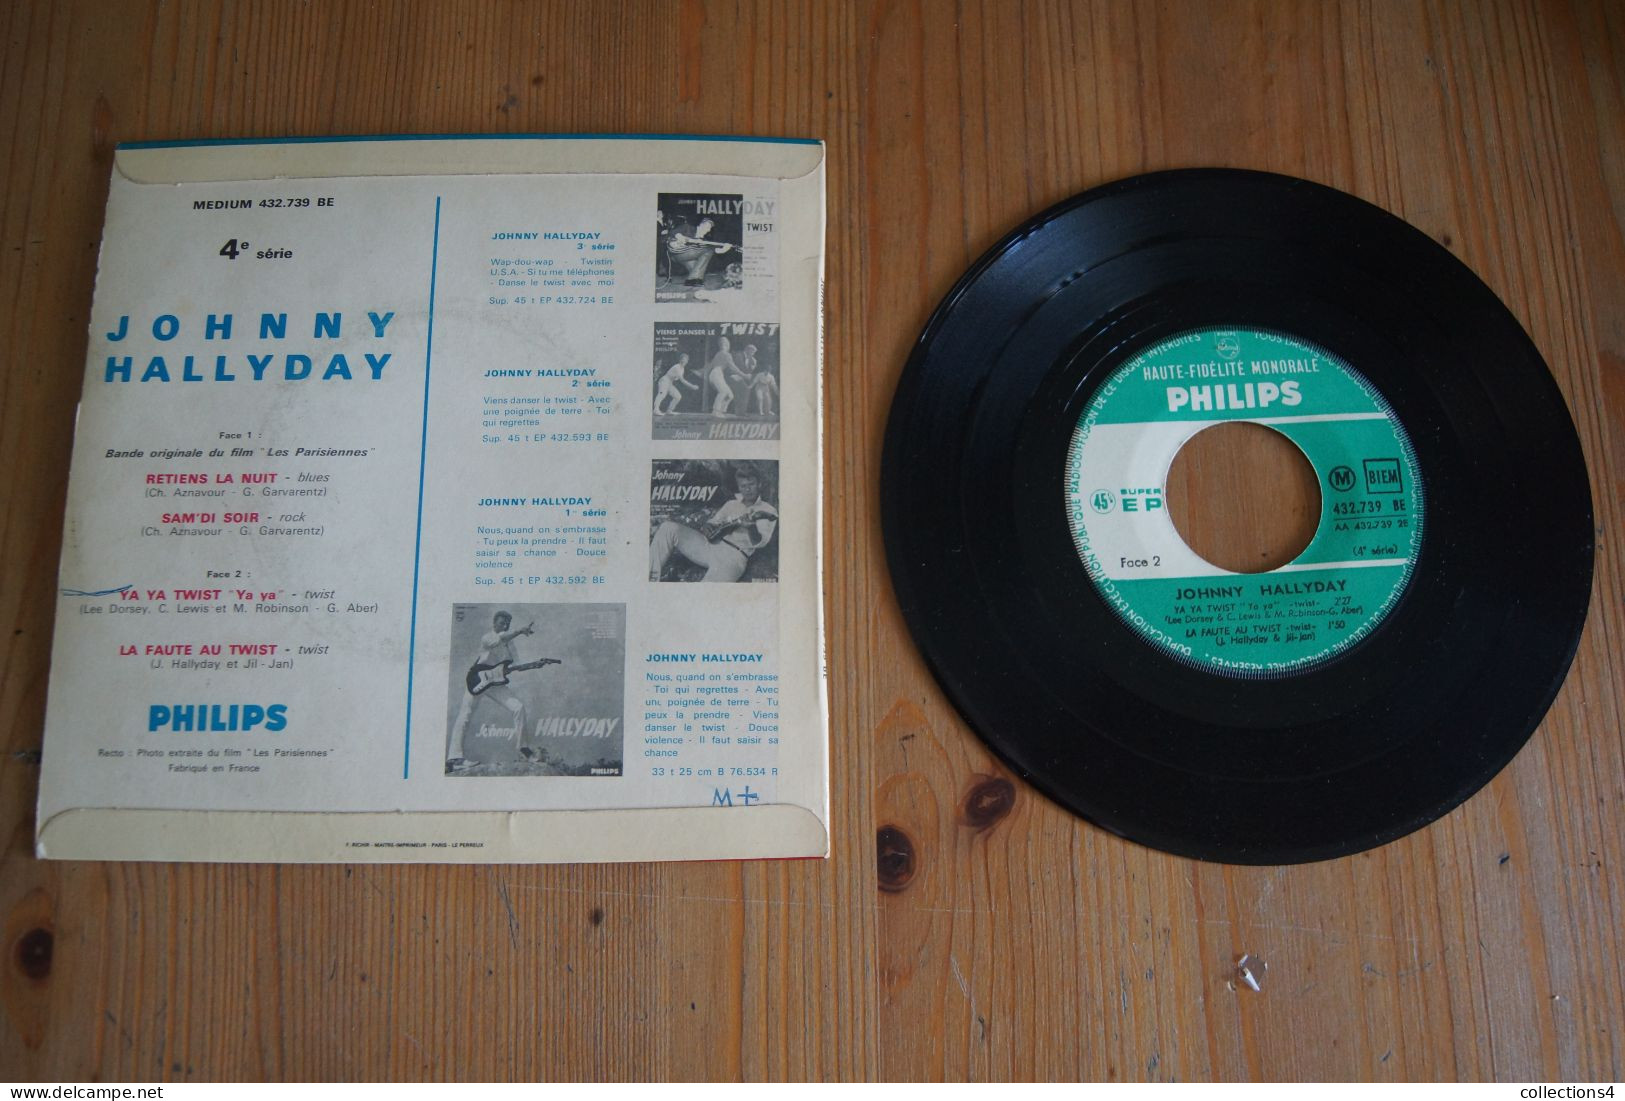 JOHNNY HALLYDAY RETIENS LA NUIT  EP 1962 VARIANTE CATHERINE DENEUVE LANGUETTE - 45 Toeren - Maxi-Single